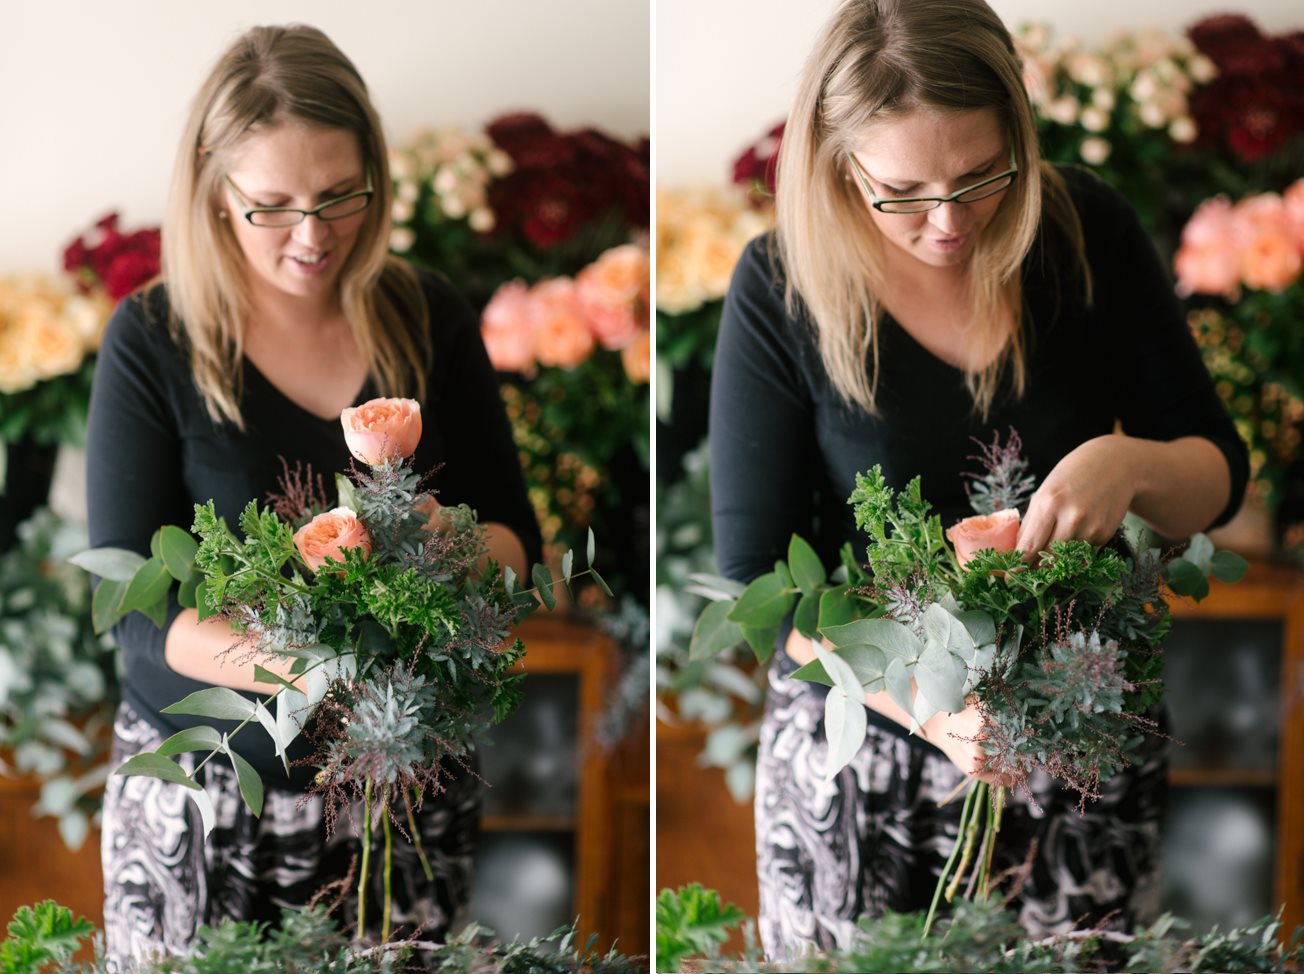 DIY Bouquet Steps - An Organic Hand-Tied Bridal Bouquet in Blush, Peach & Marsala